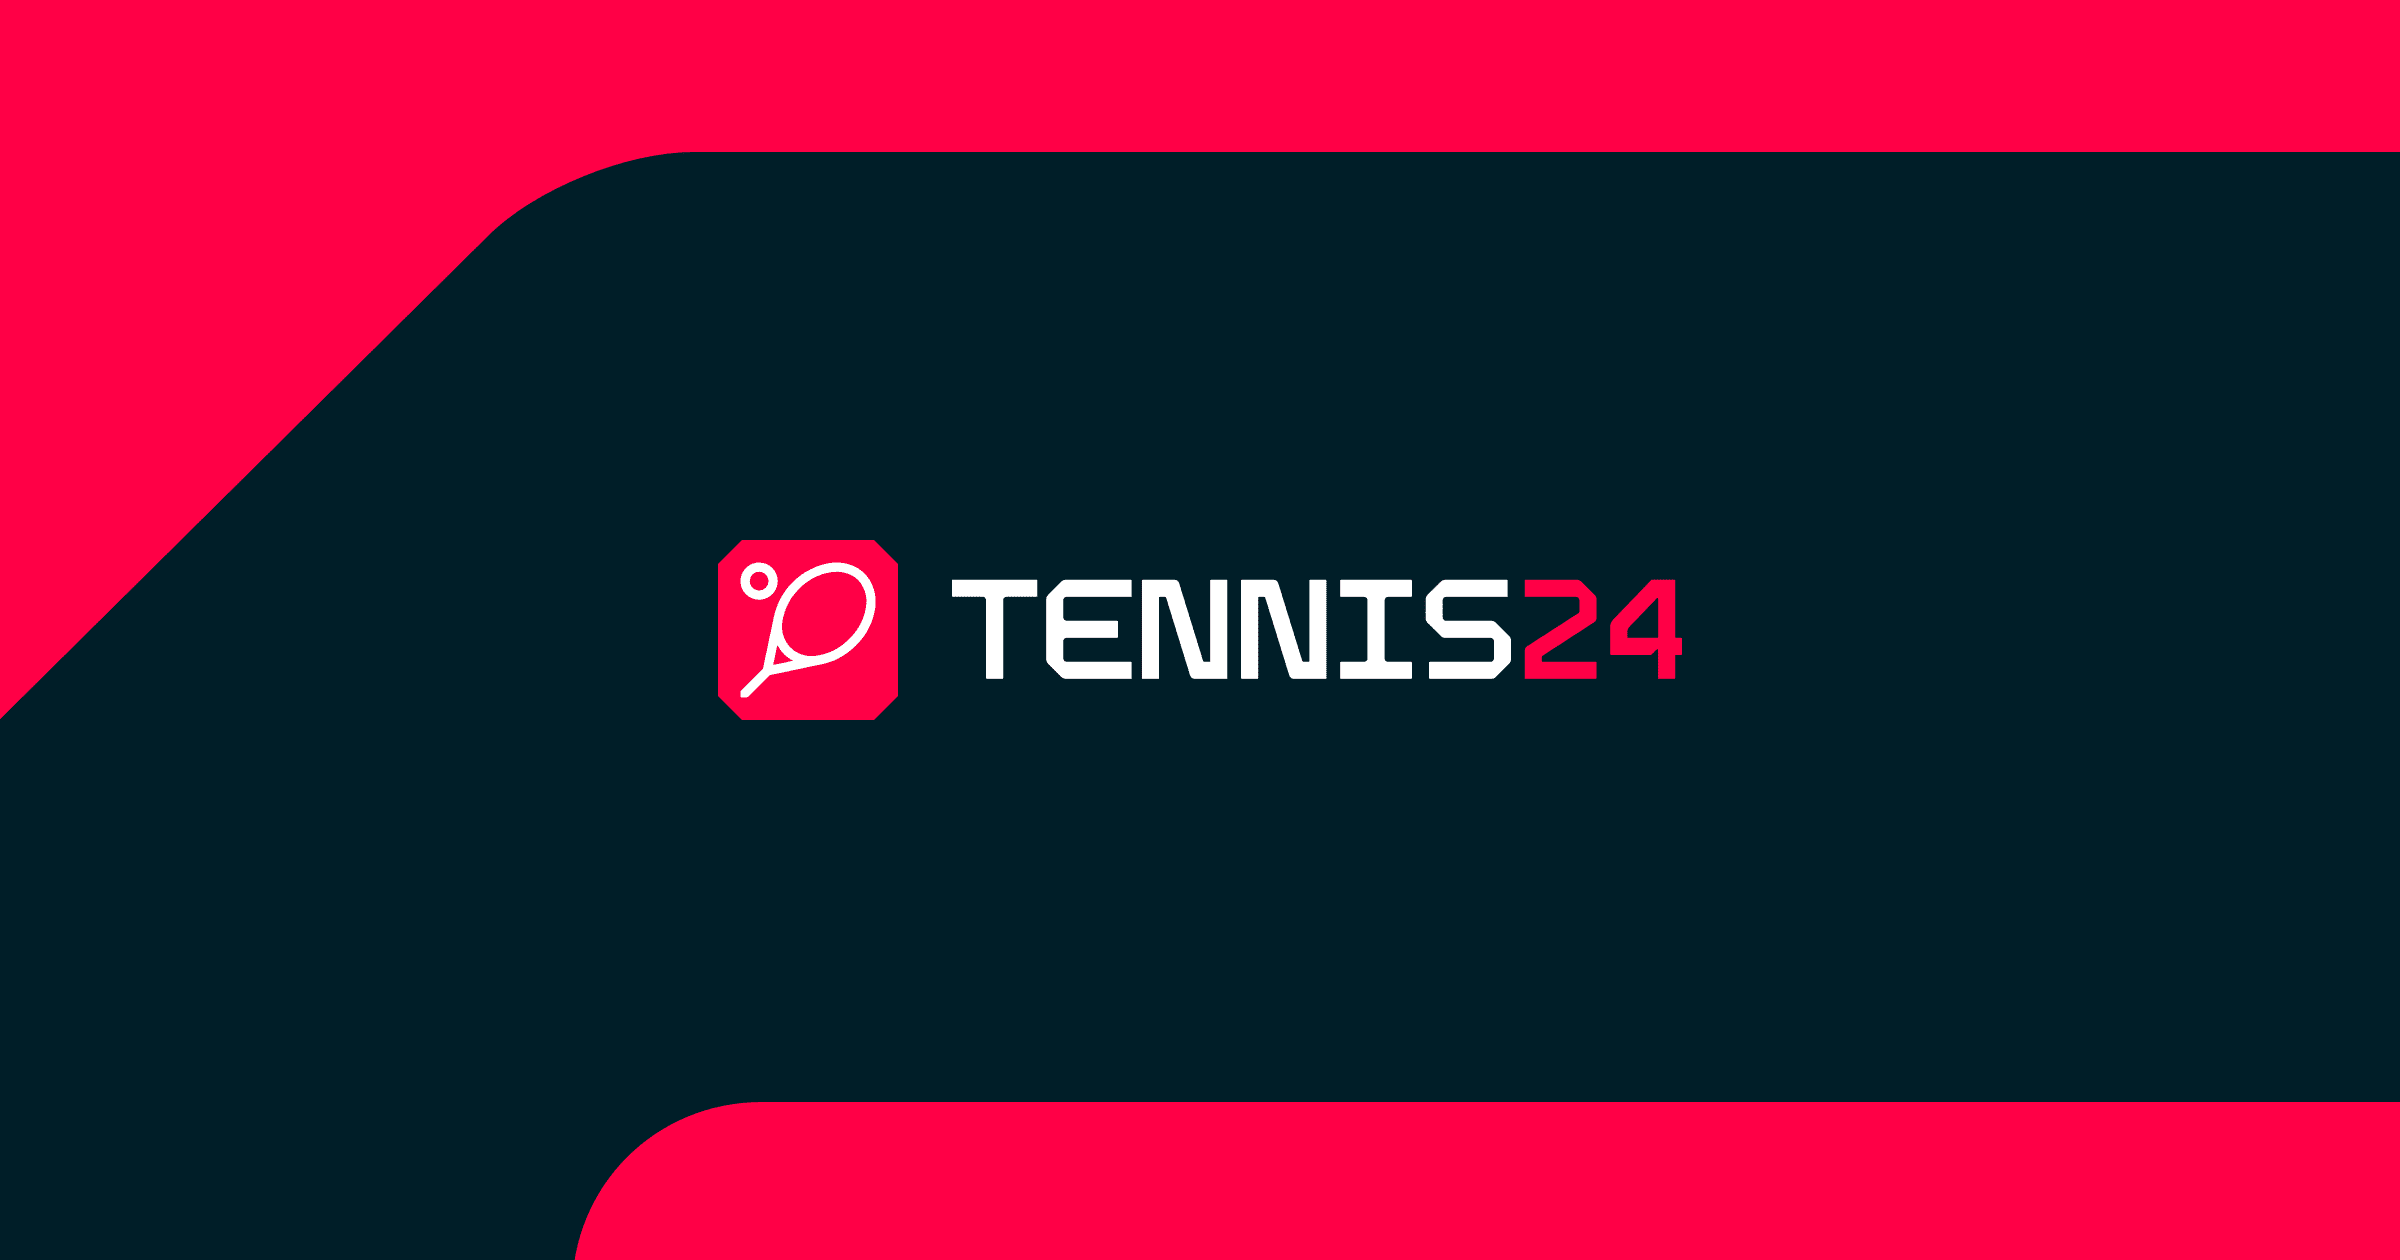 Tennis24 Live Tennis Scores, Results, Draws